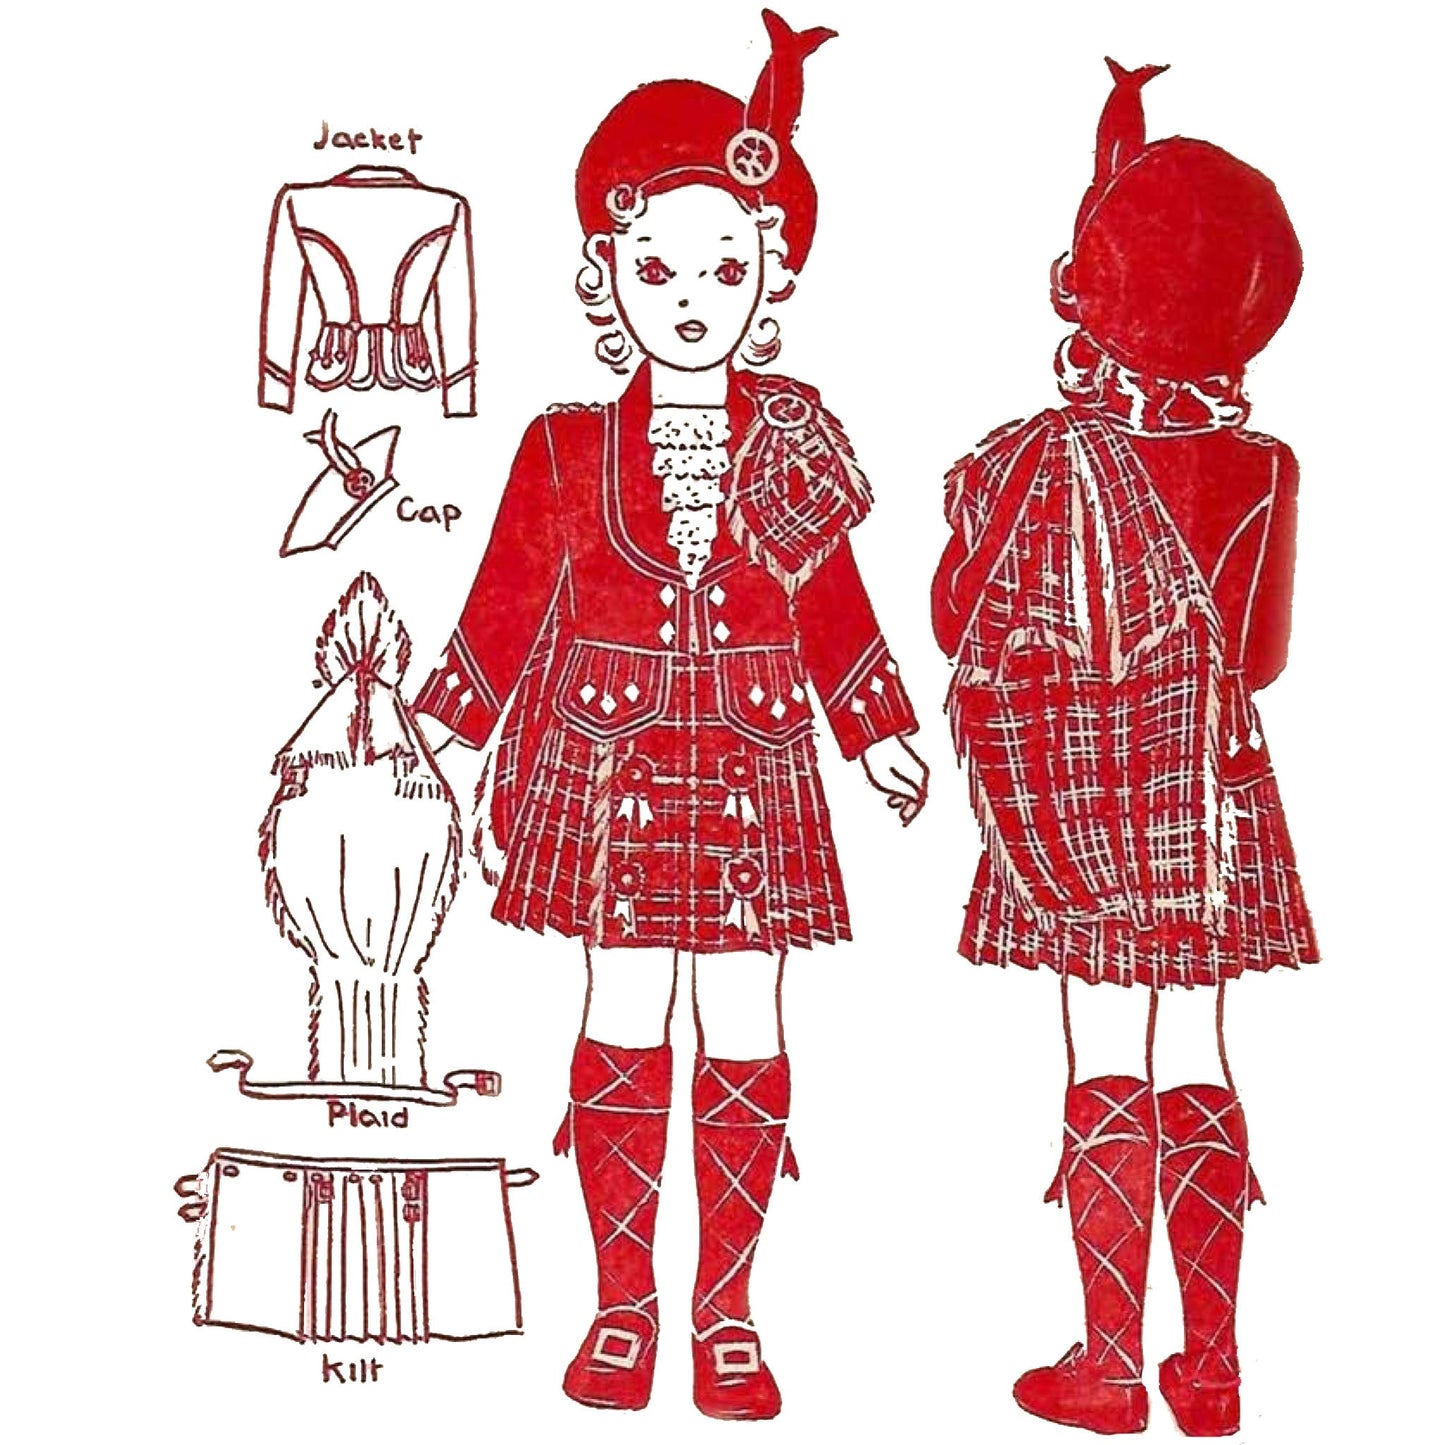 Child wearing full traditional Highland dress costume.